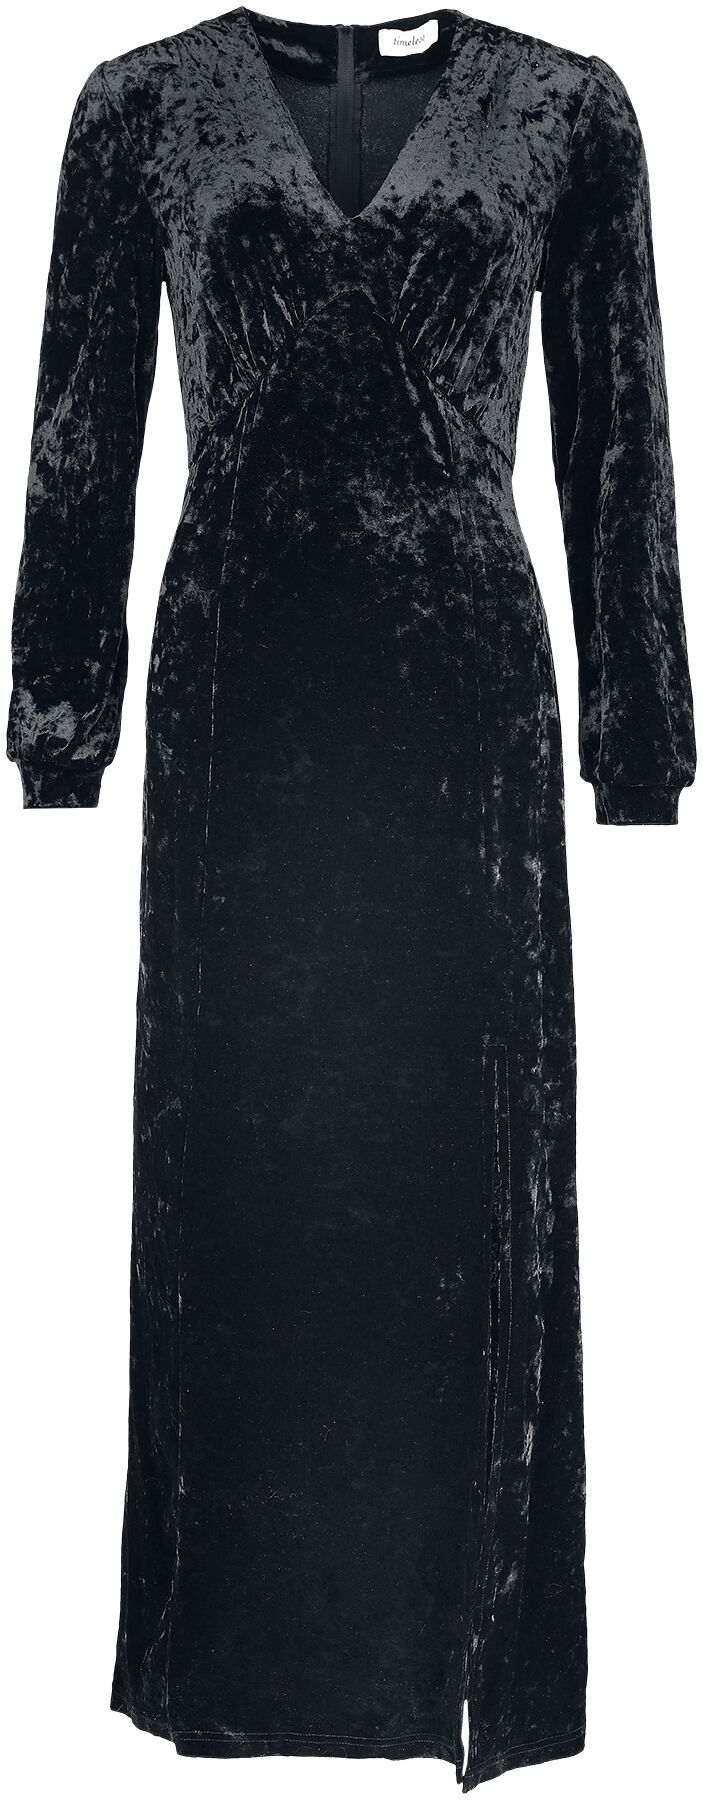 Timeless London Miley Black Dress Langes Kleid schwarz in S